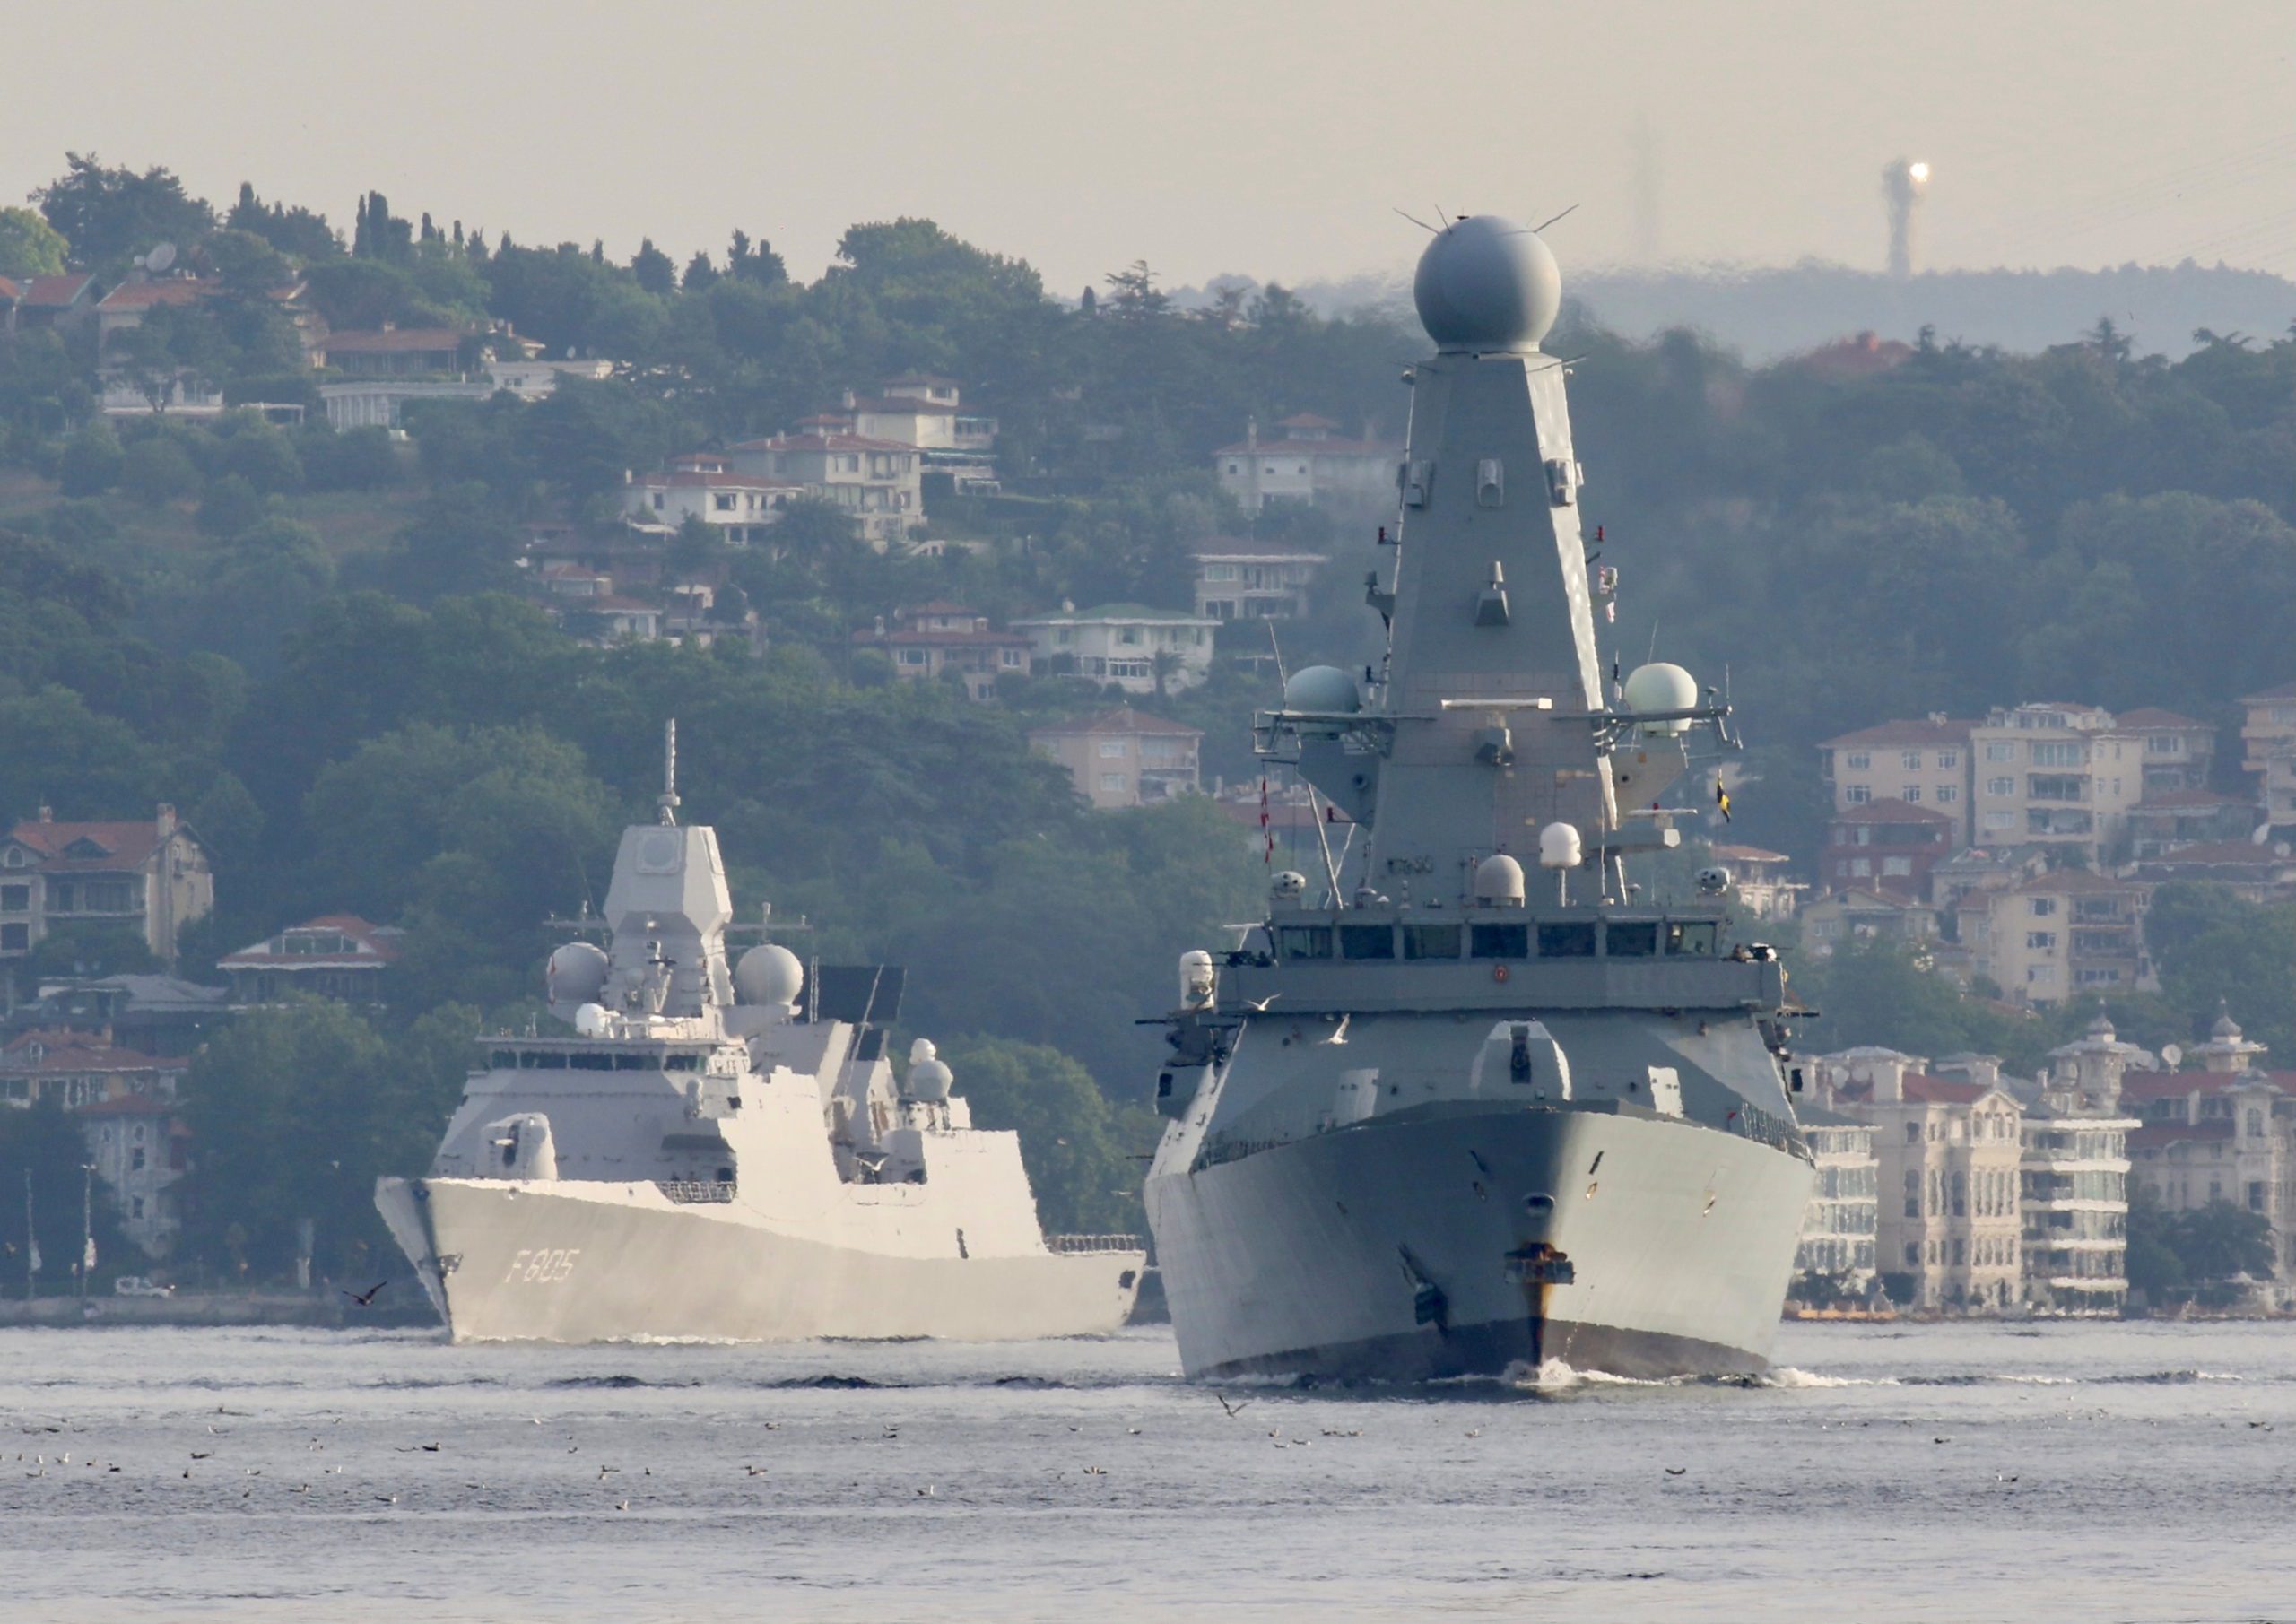 British Royal Navy destroyer HMS Defender in the Bosphorus Strait. REUTERS/Yoruk Isik